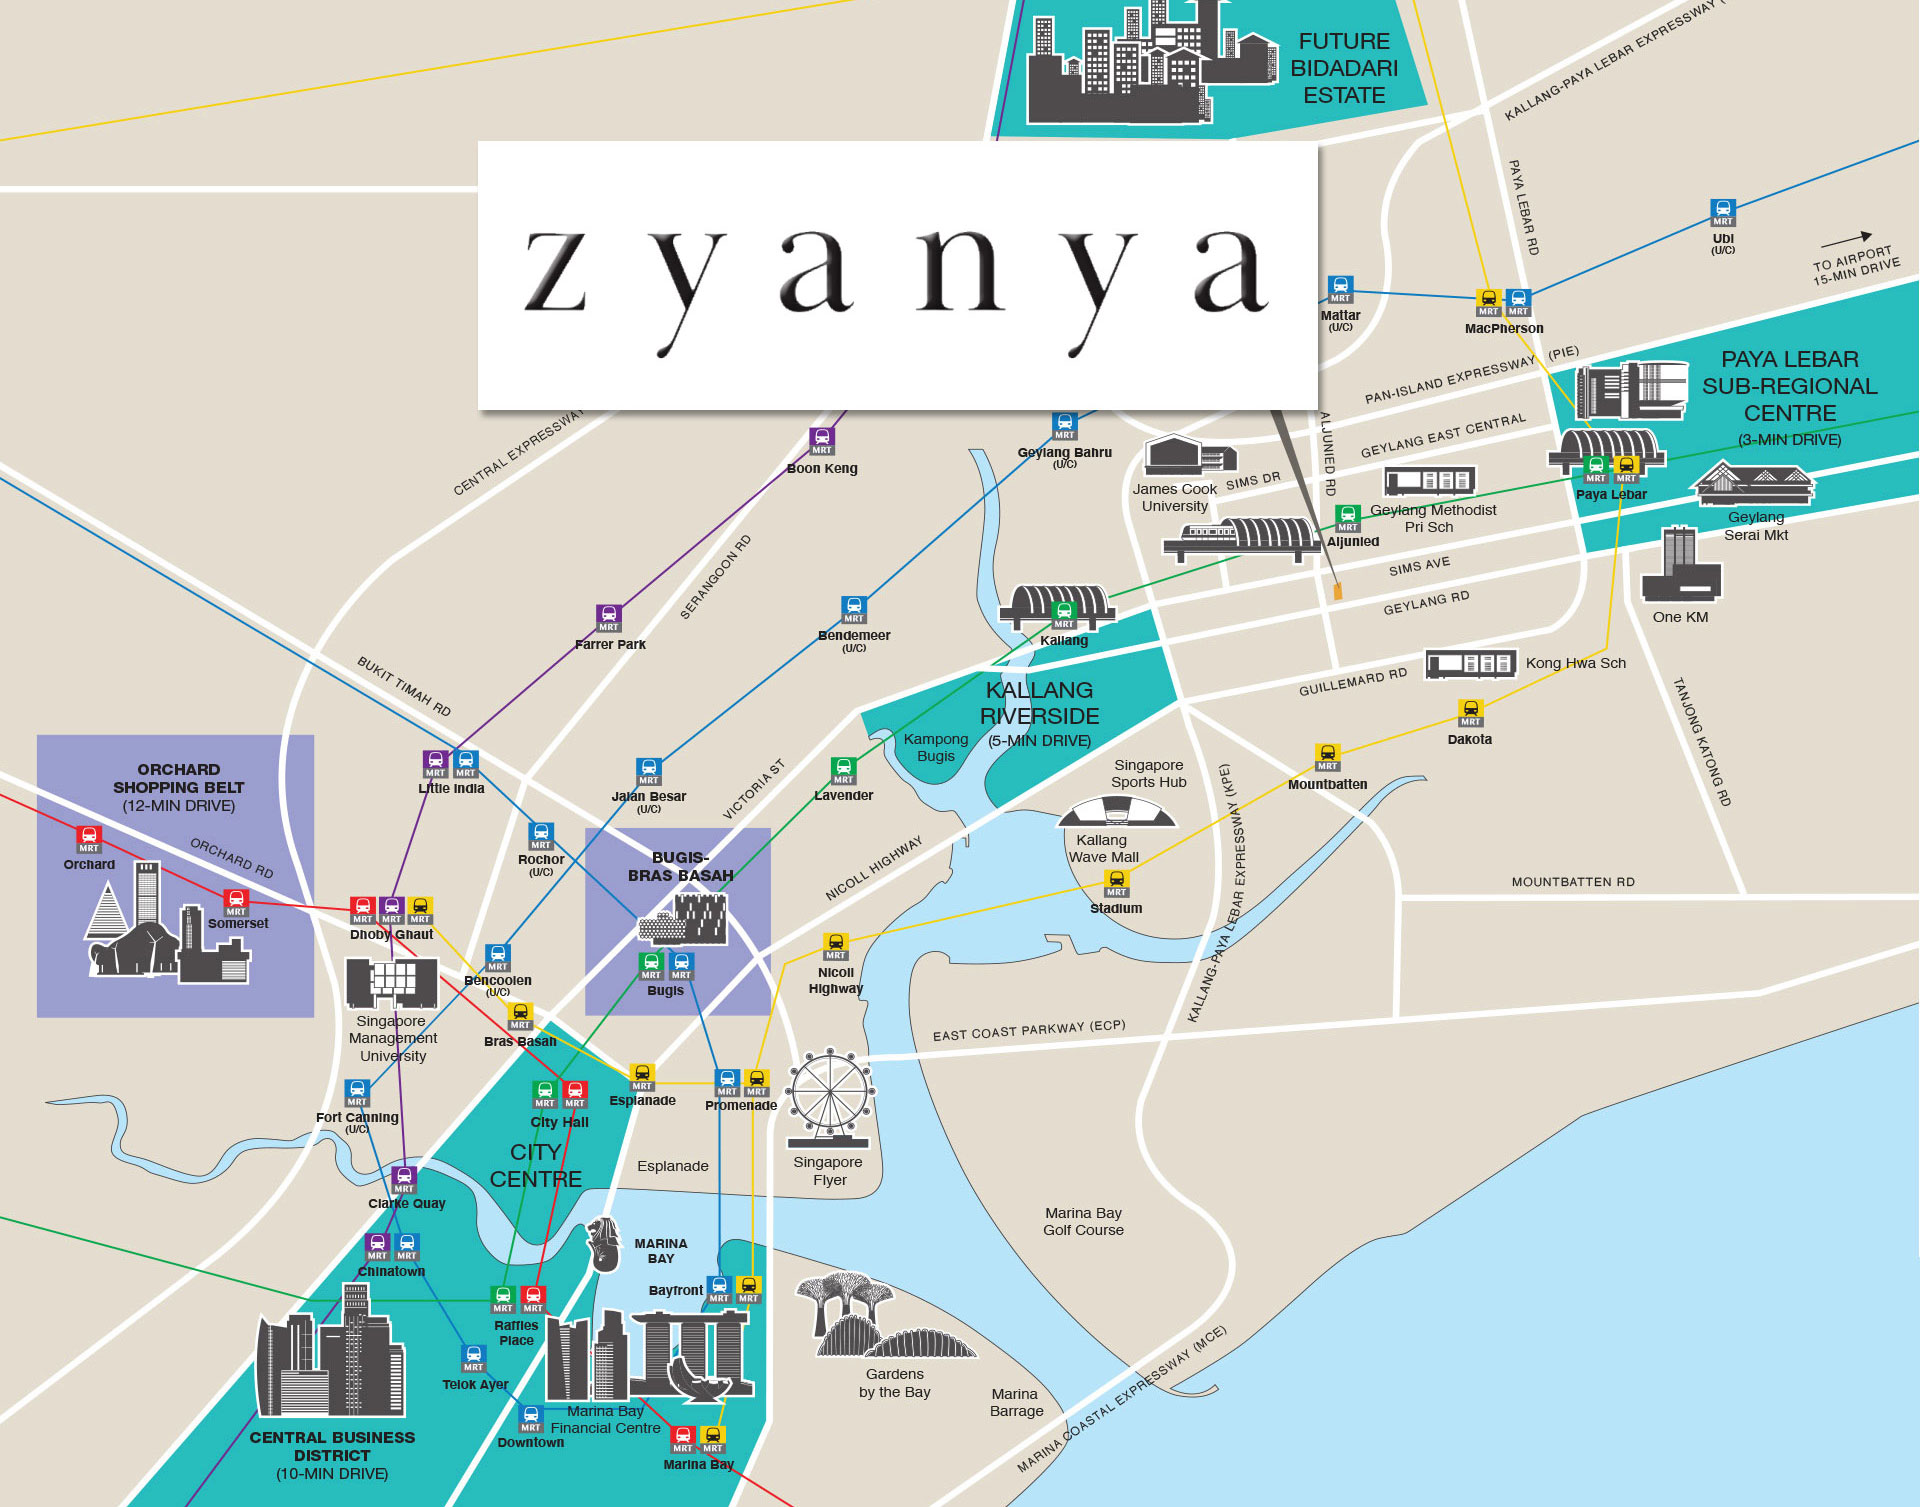 List of public transportation near Zyanya Condo within short distance
